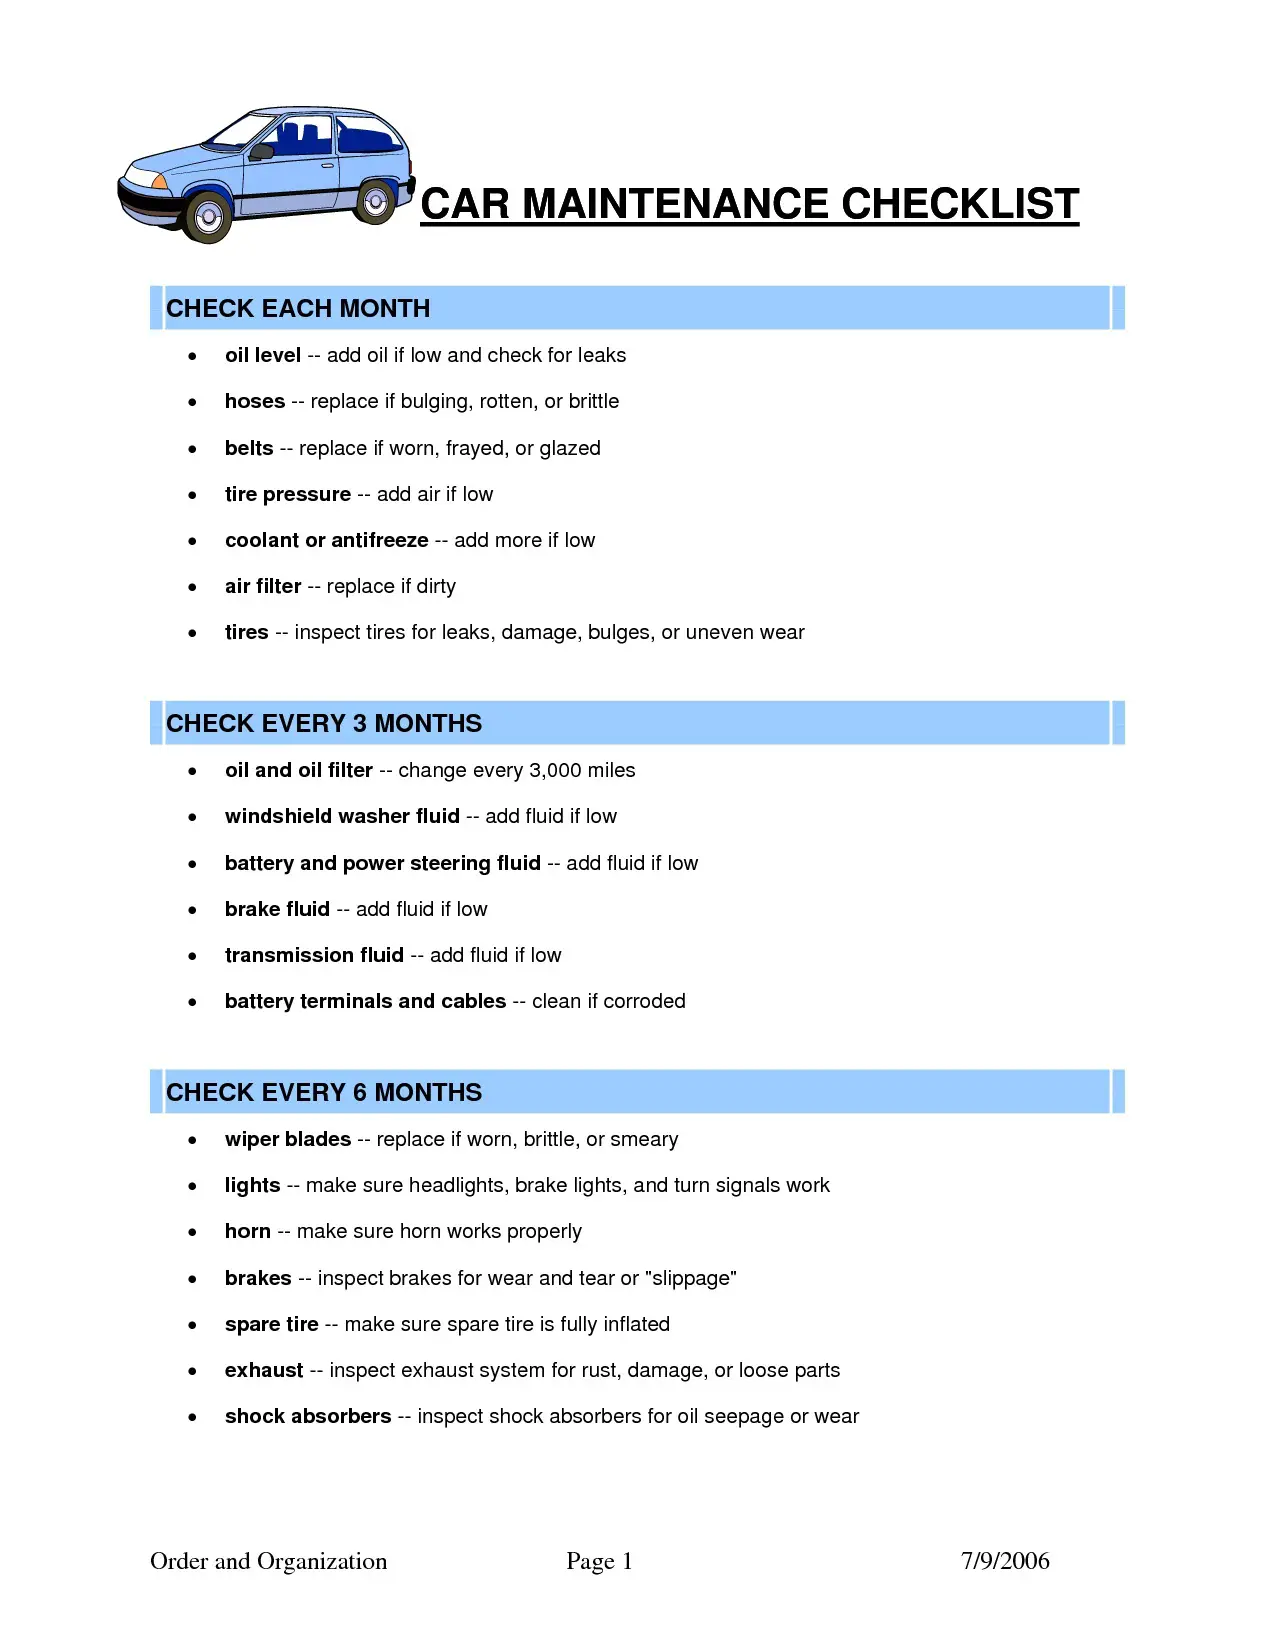 basic maintenance for car checklist